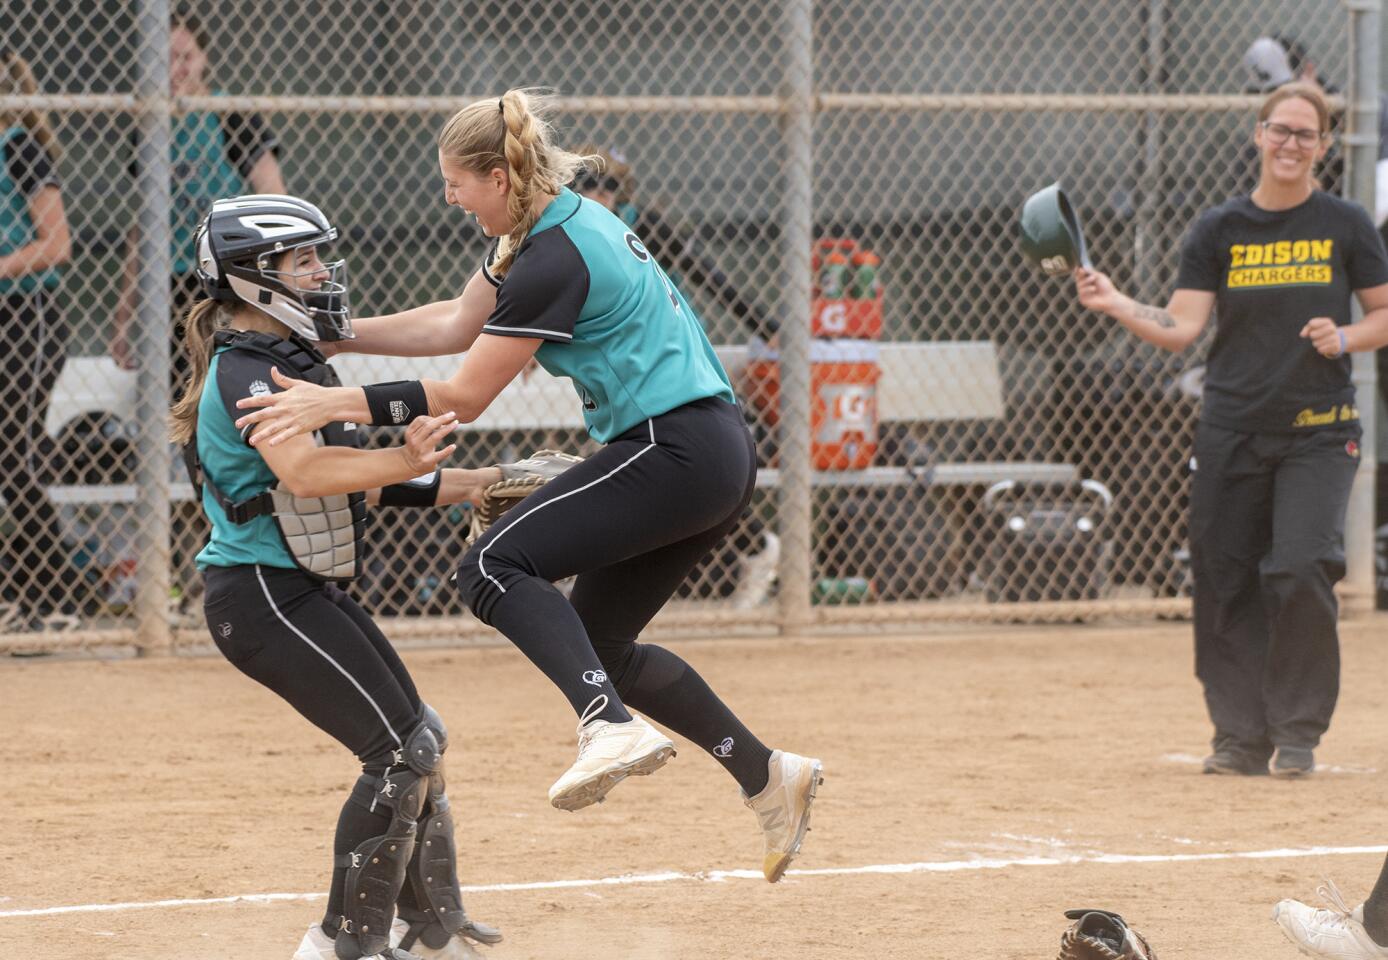 Photo Gallery: Edison vs. Aliso Niguel in softball